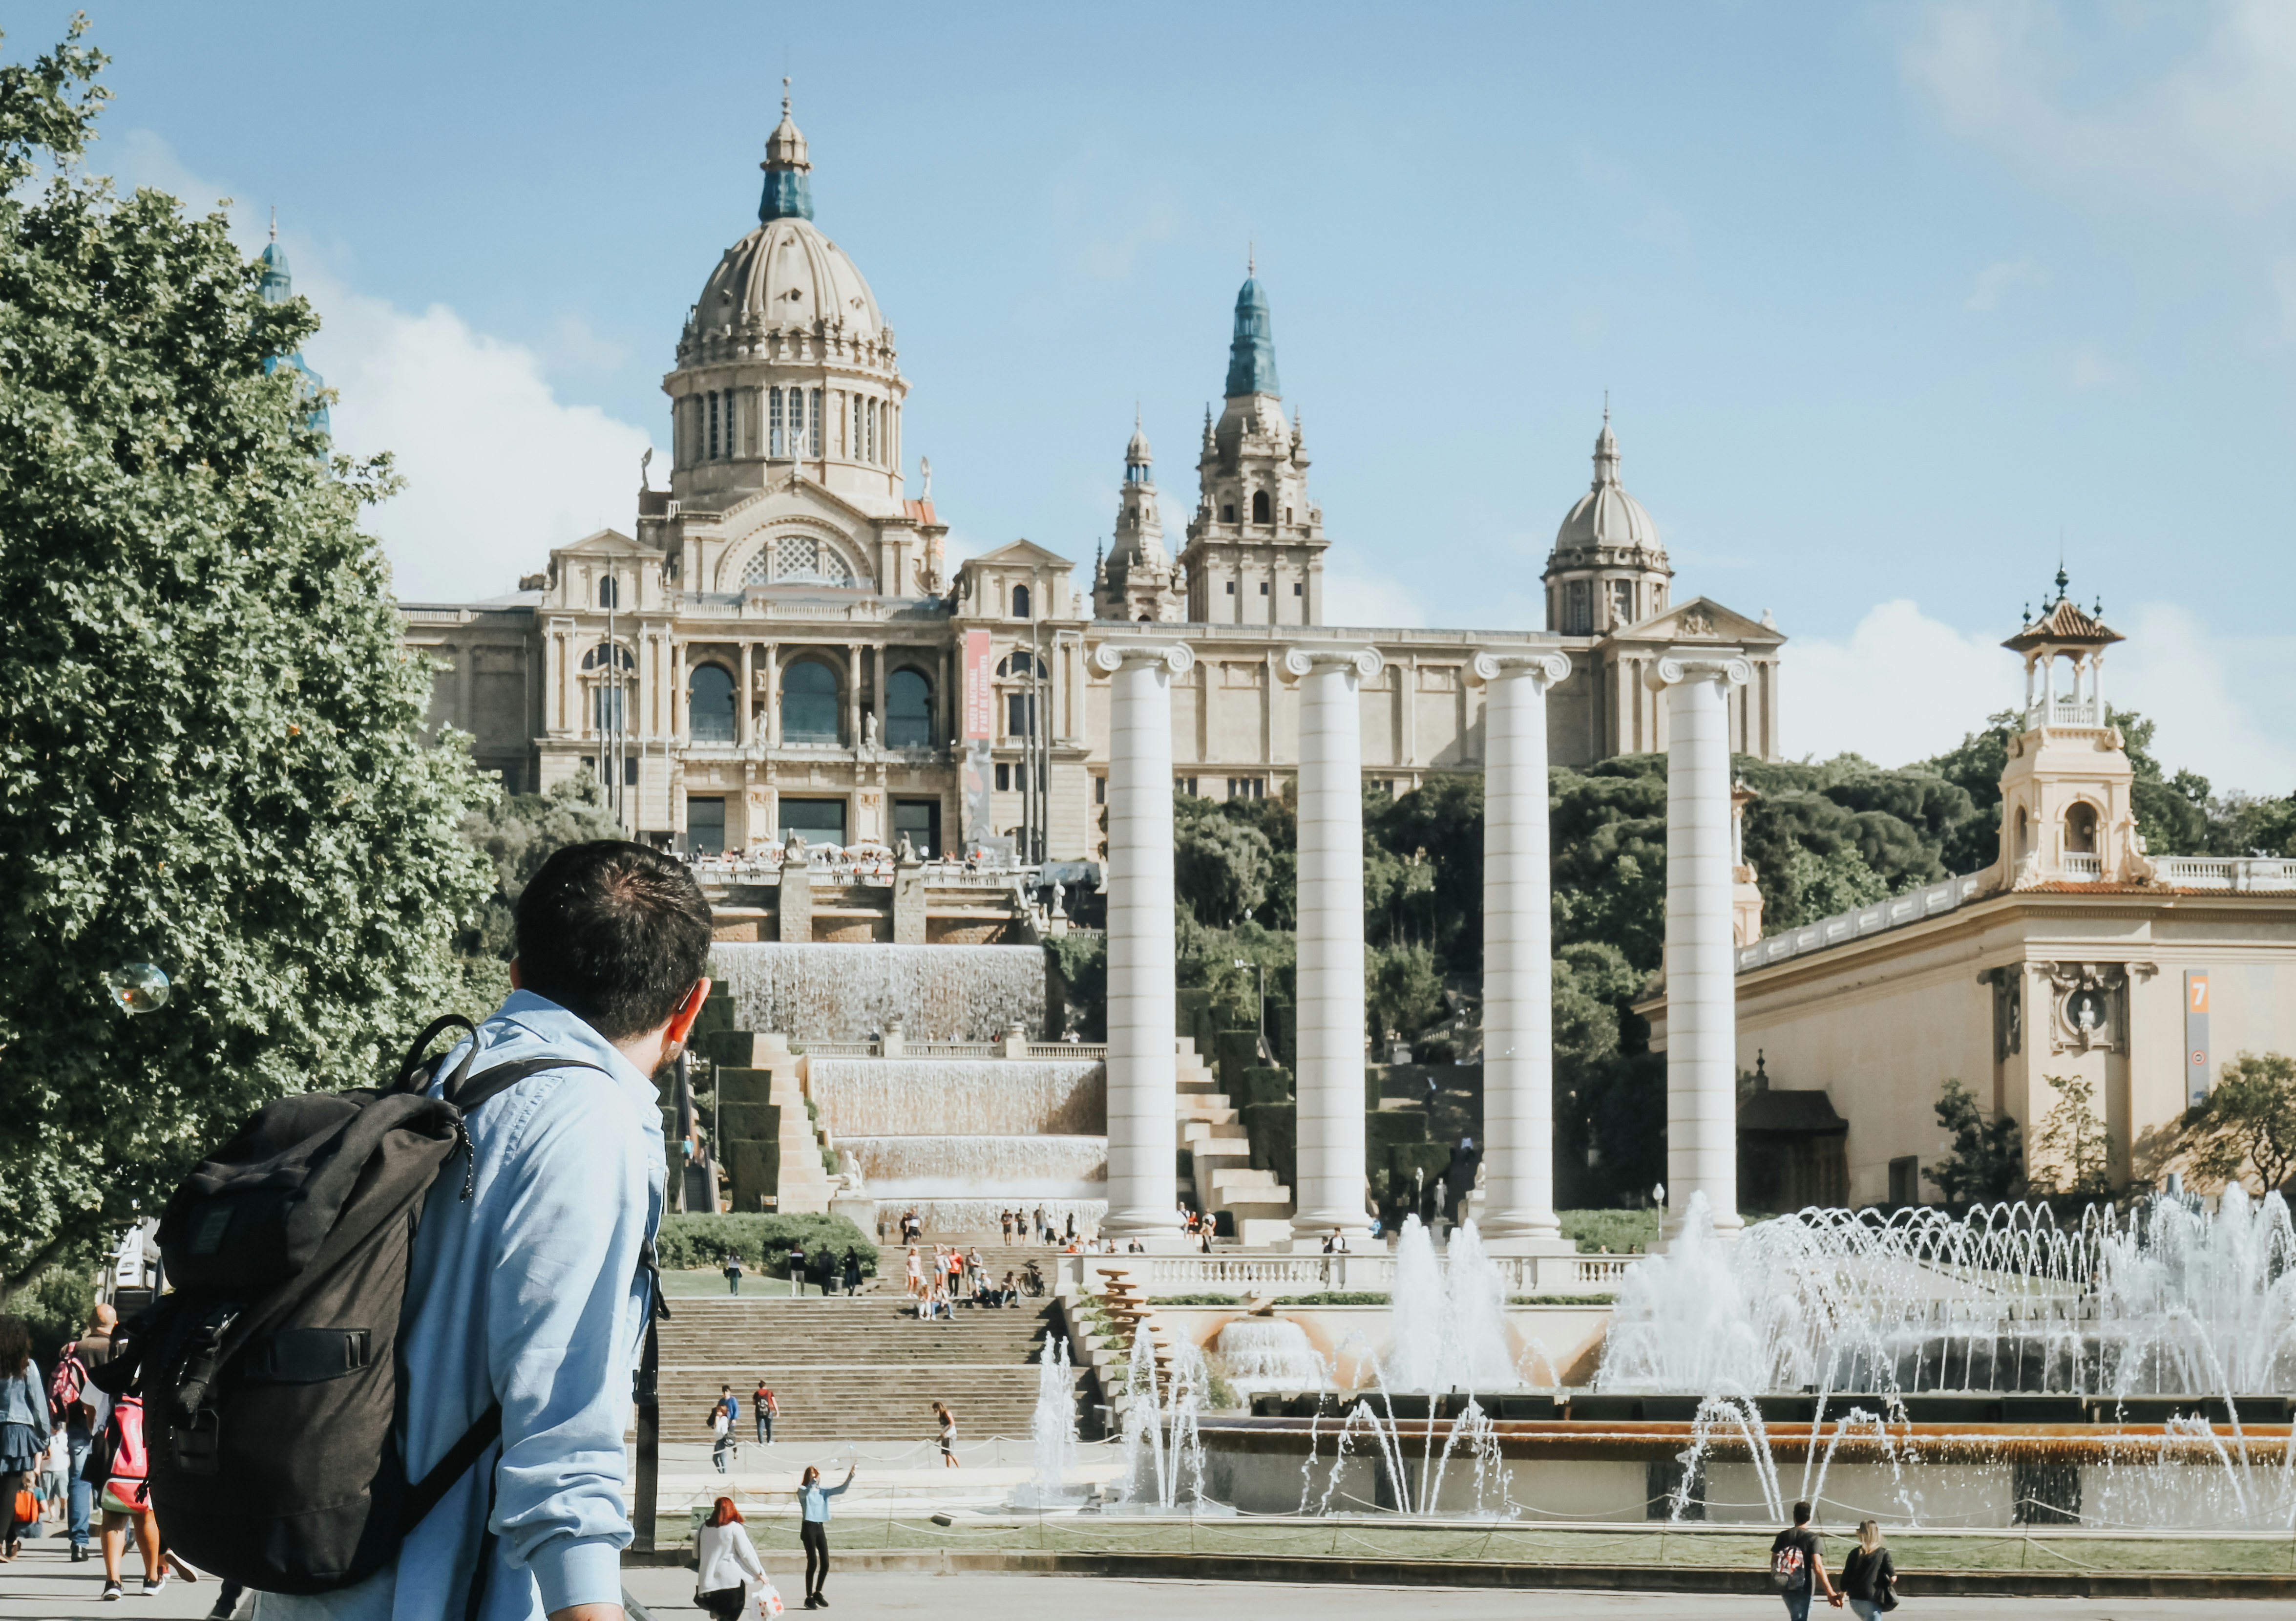 Man admiring the architectural wonder of the Museu Nacional d'Art de Catalunya (National Museum of Art of Catalonia)